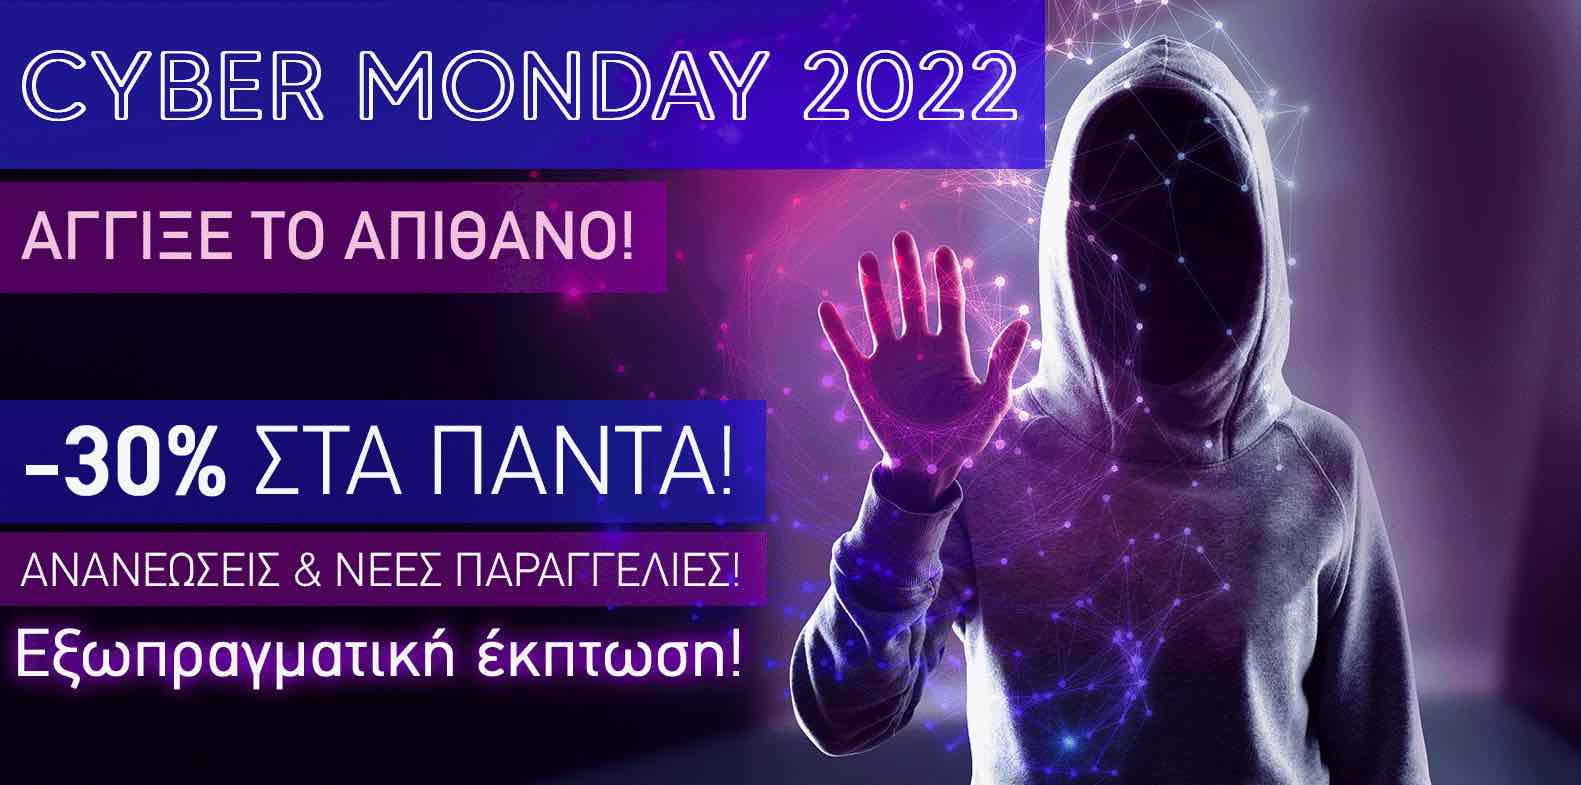 Cyber Monday 2022!